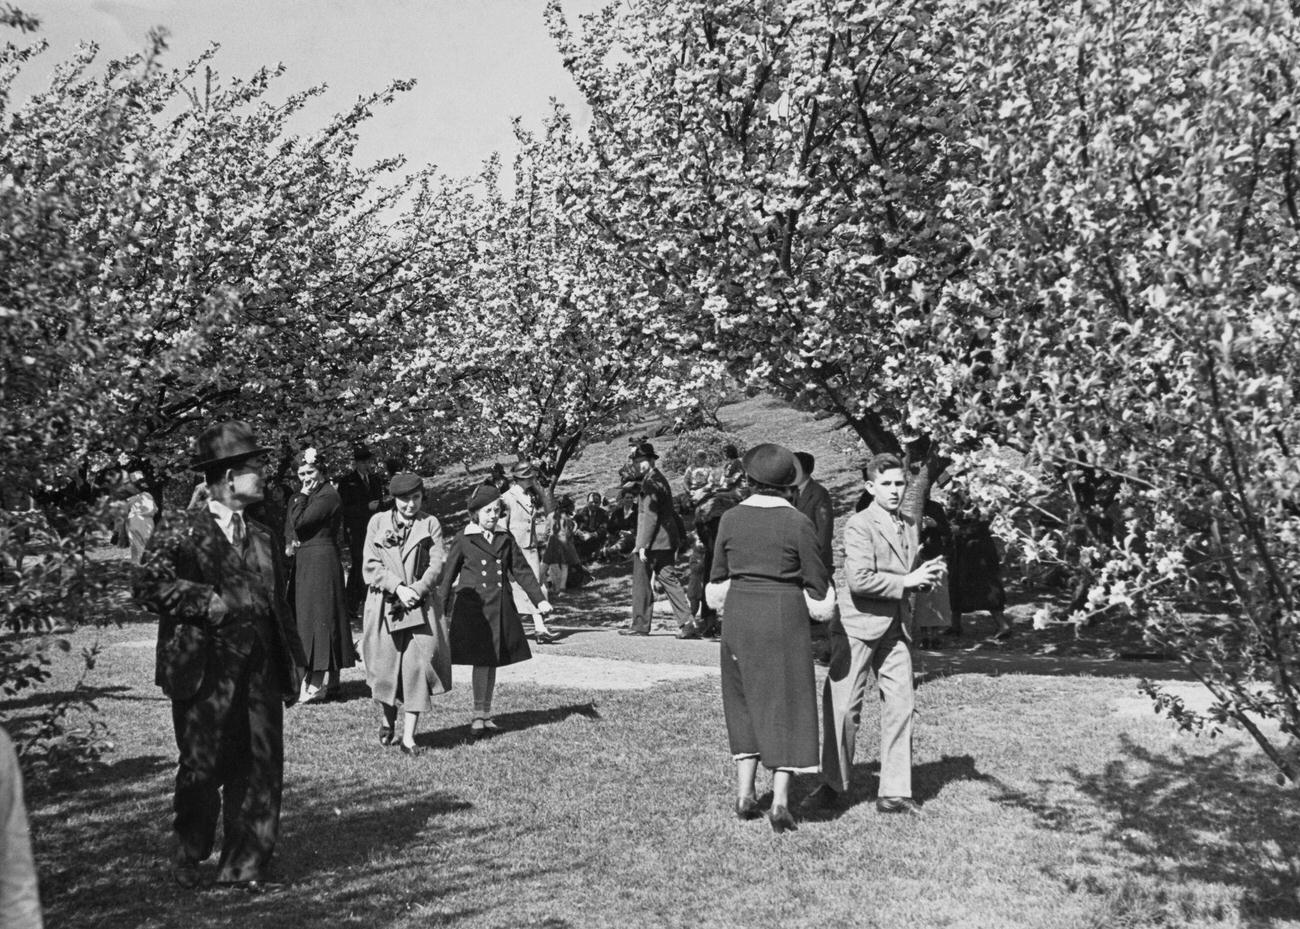 Cherry Blossom Trees In Brooklyn Botanic Garden, Circa 1935